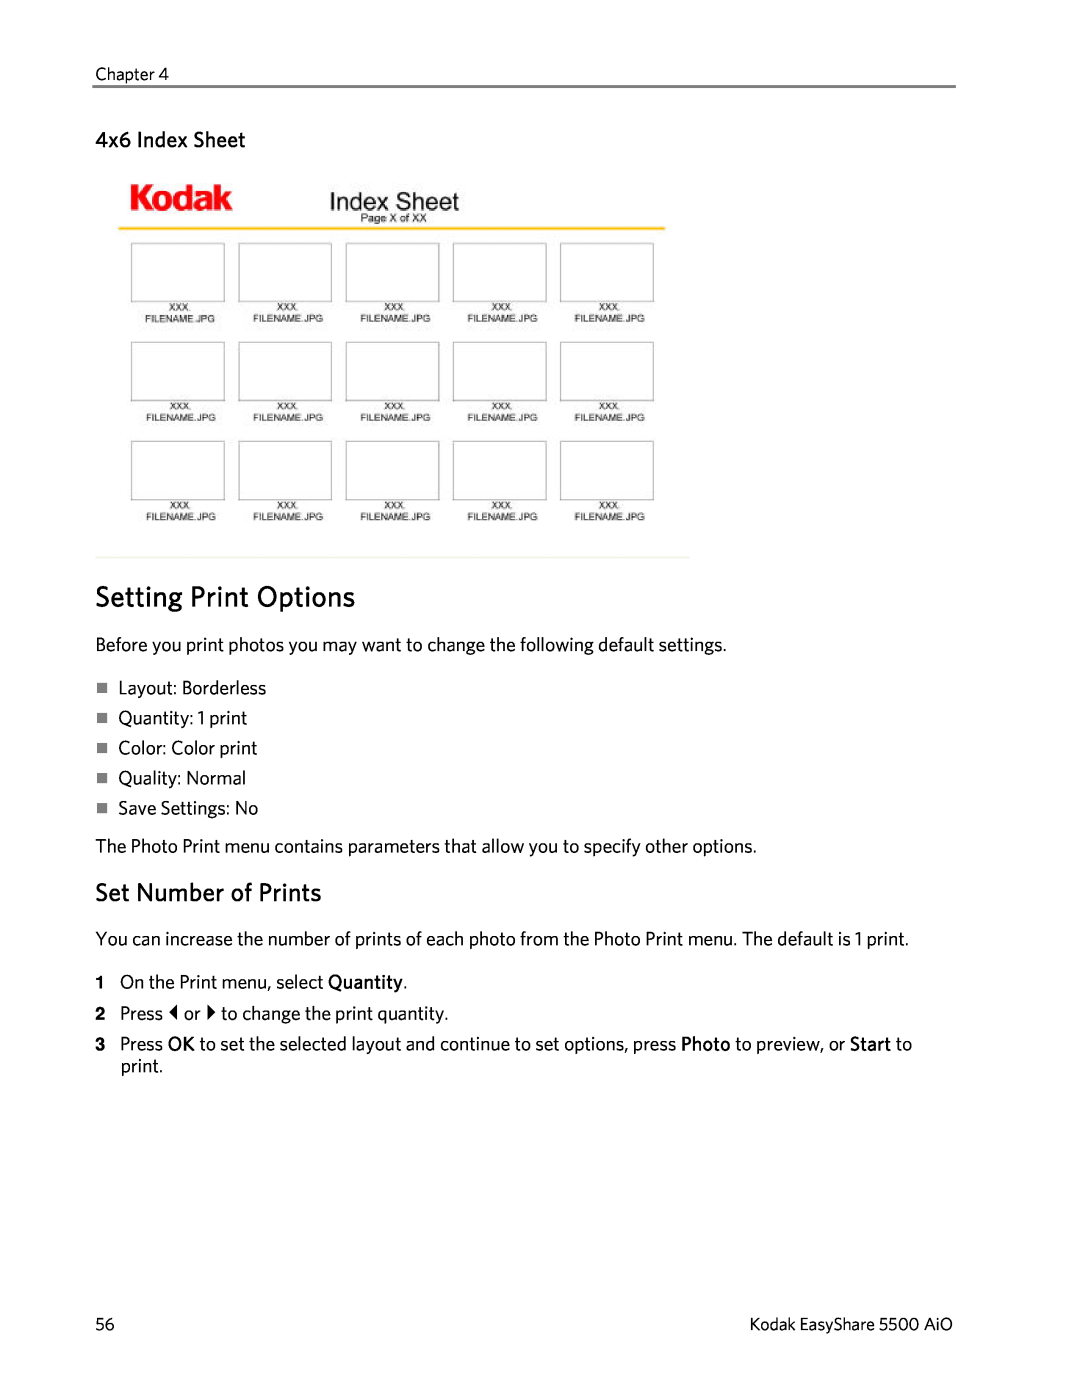 Kodak 5500 manual Setting Print Options, Set Number of Prints, 4x6 Index Sheet 